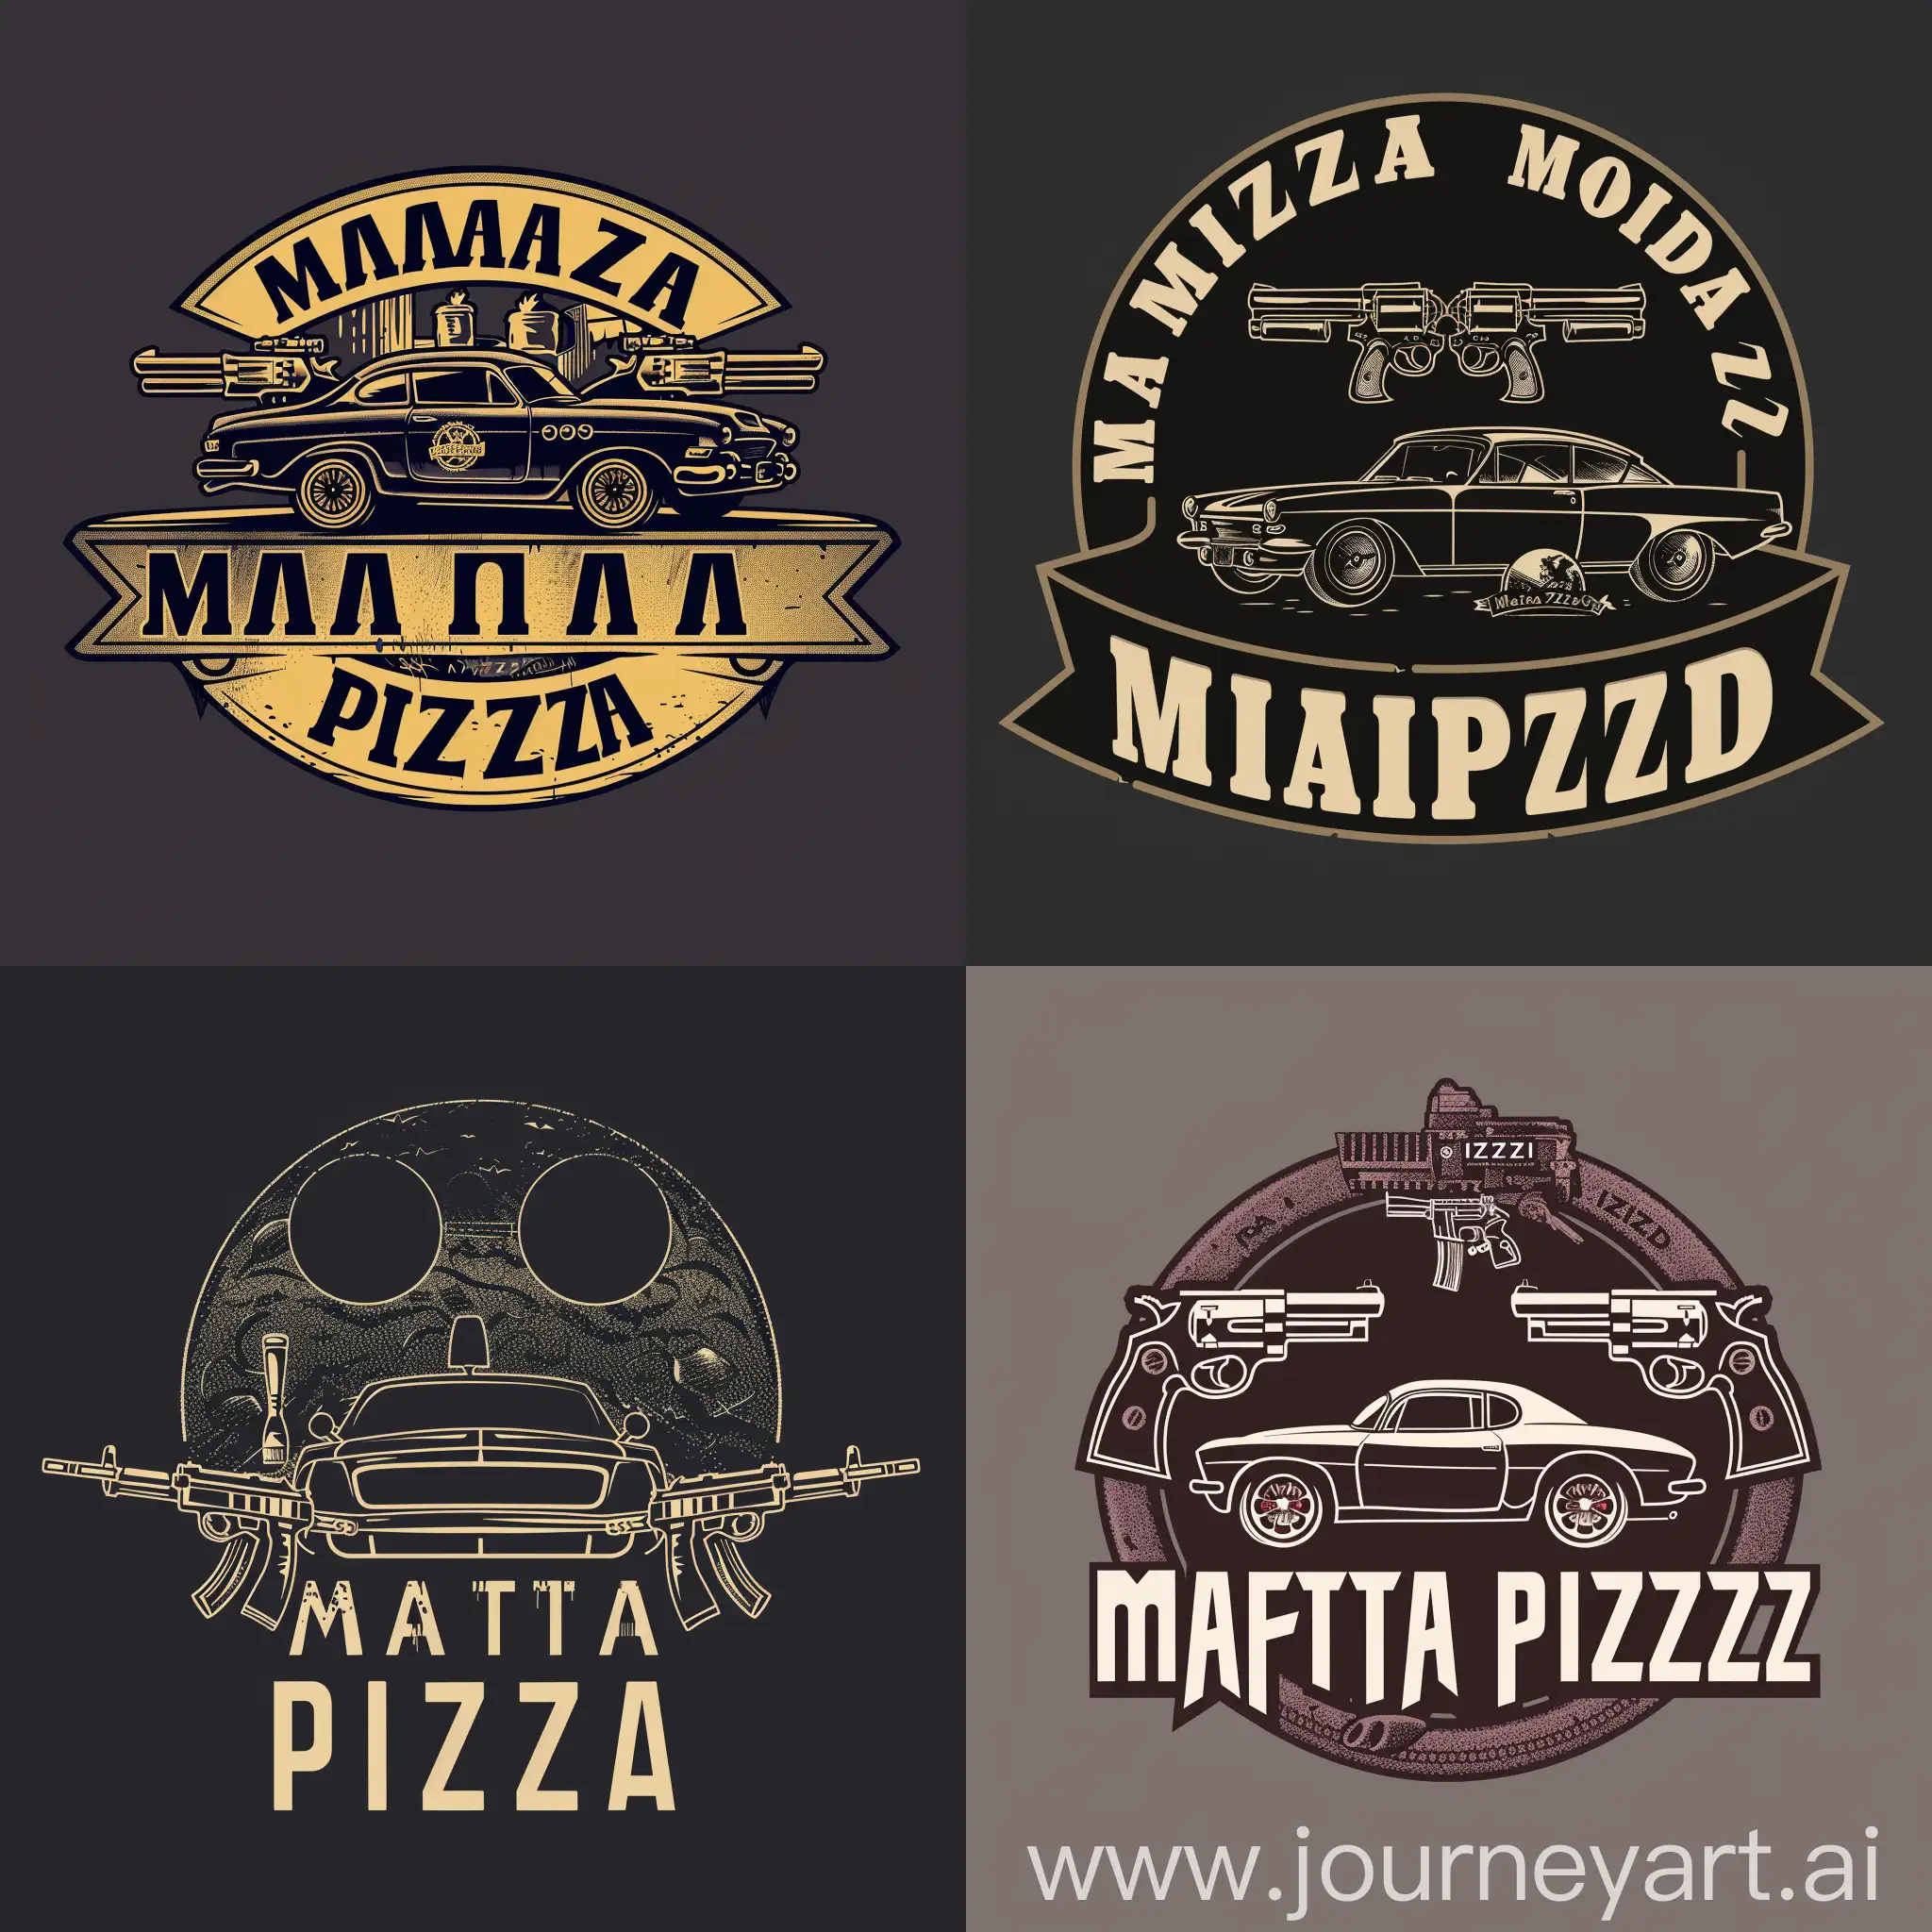 MafiaThemed-Pizzeria-Logo-with-DoubleBarreled-Guns-and-Classic-Car